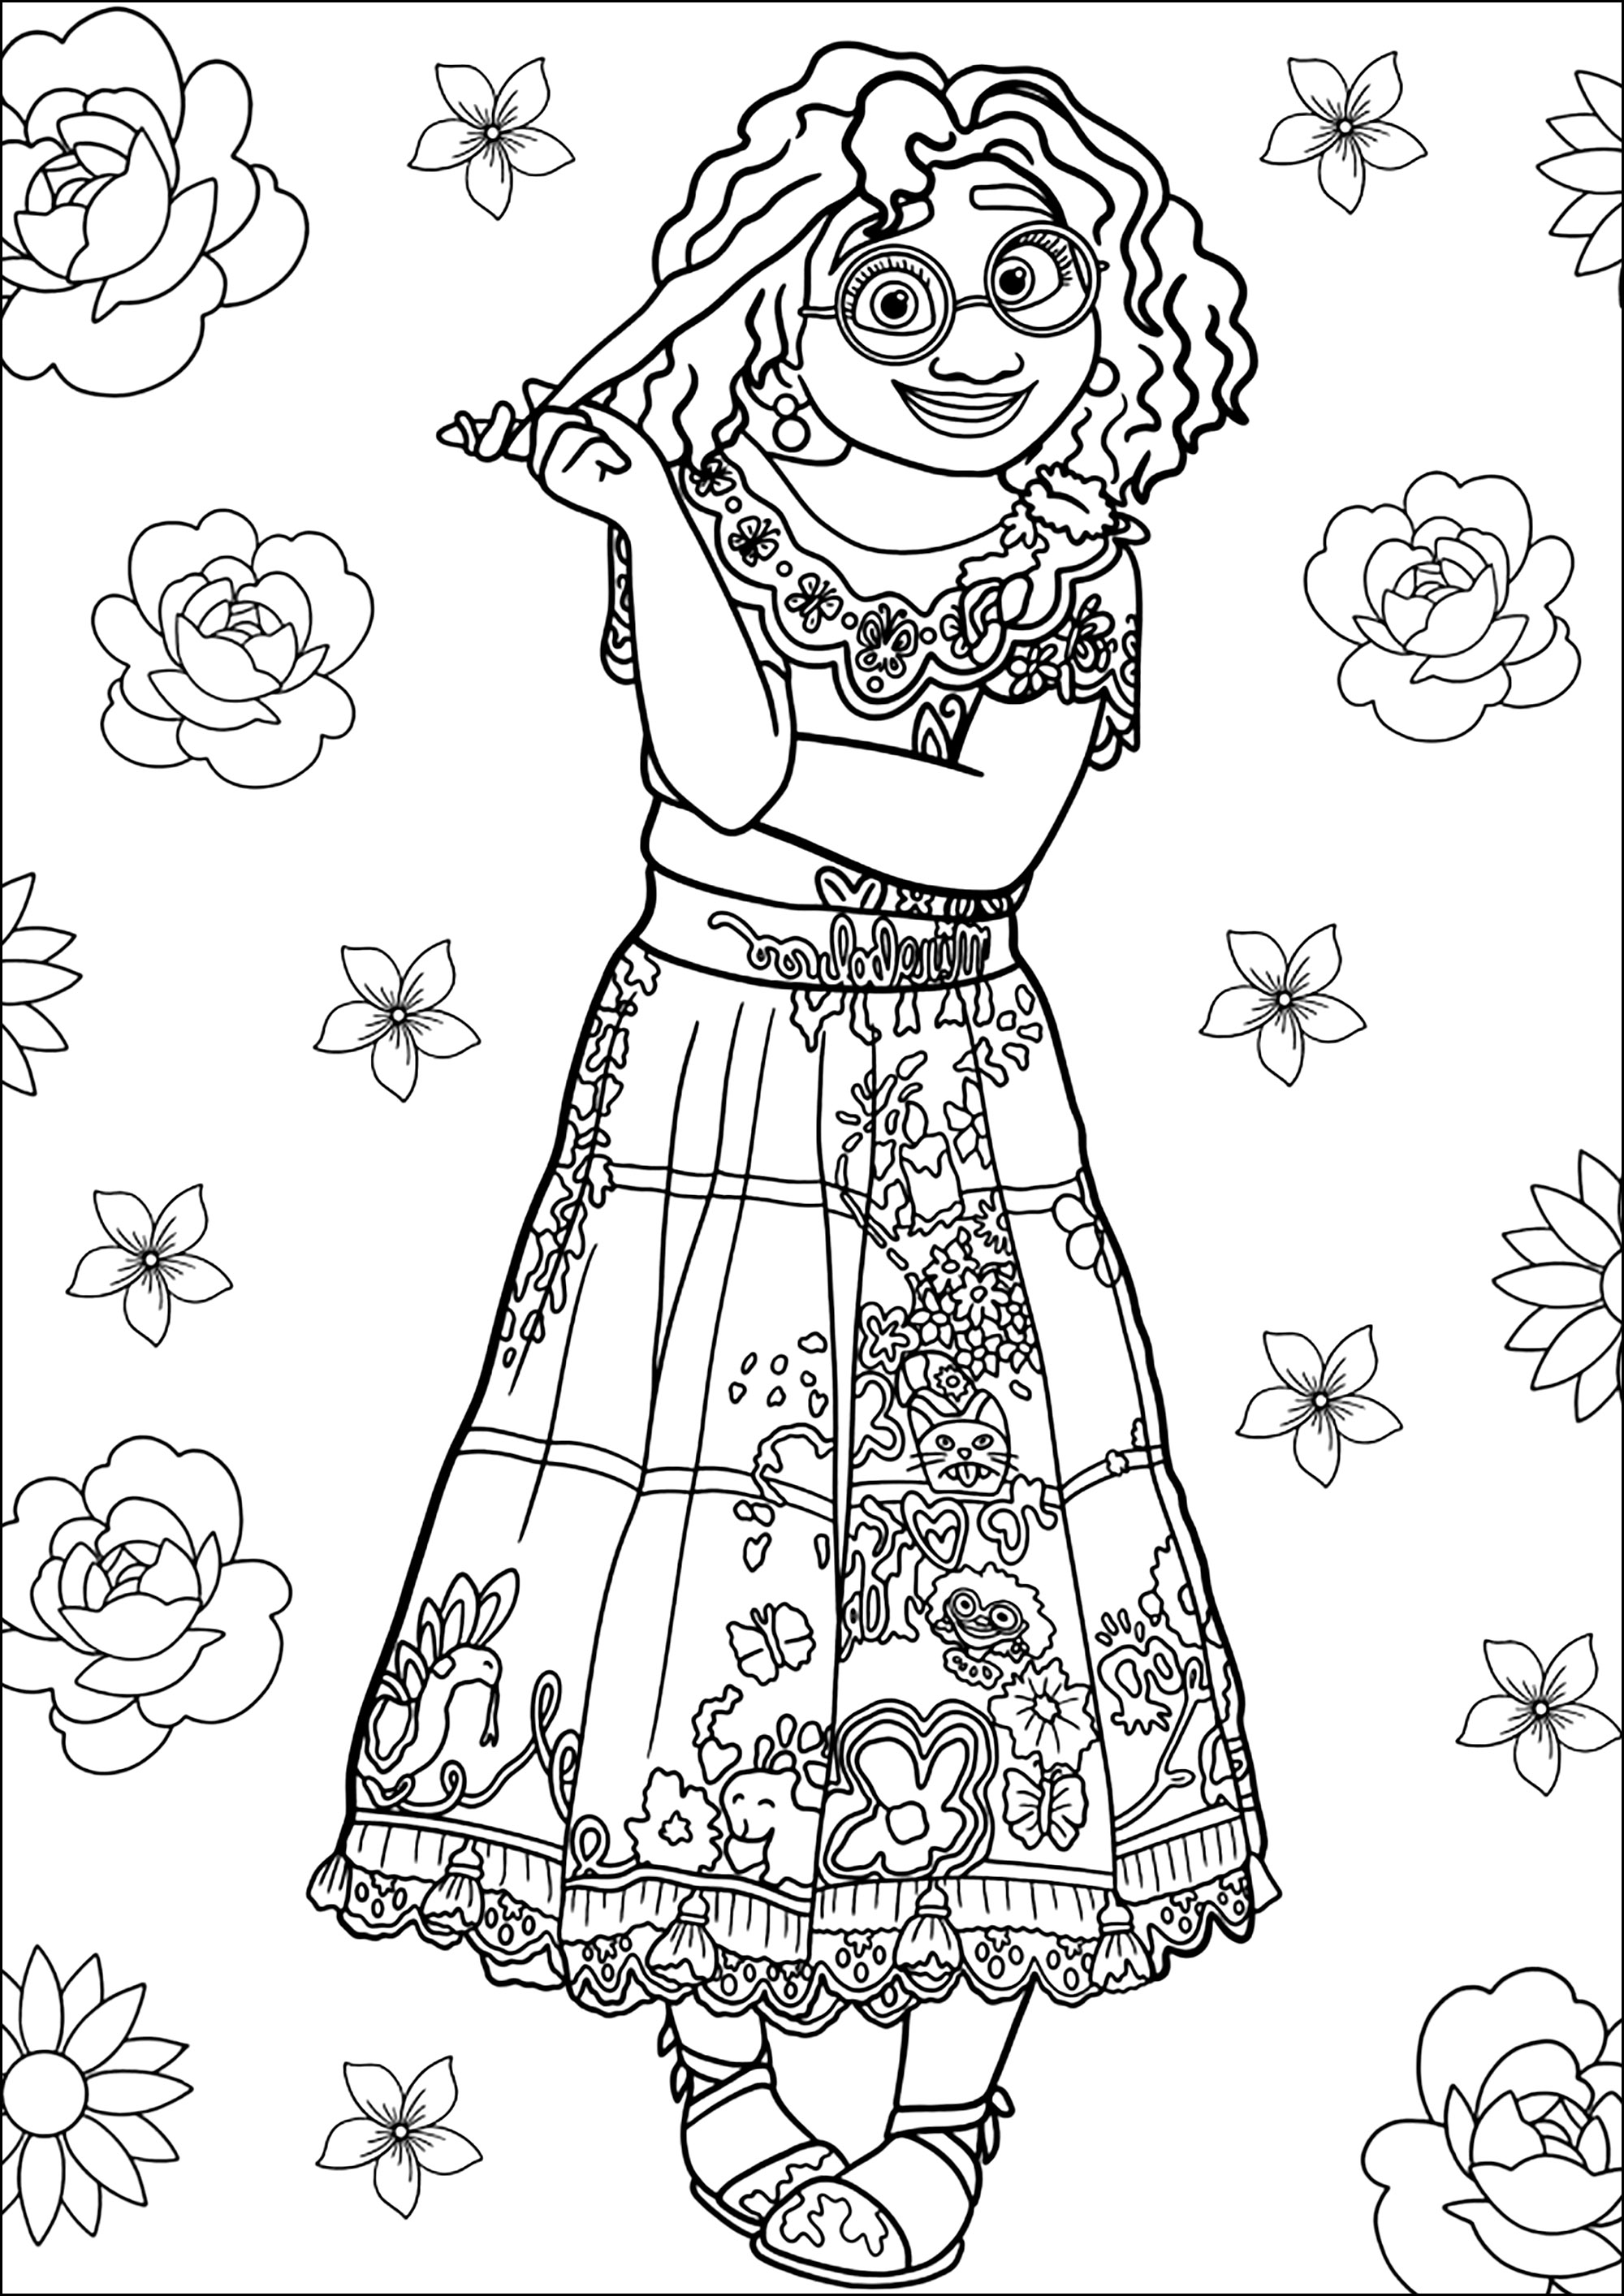 Encanto coloring page: Mirabel Madrigal in a pretty dress - Encanto ...